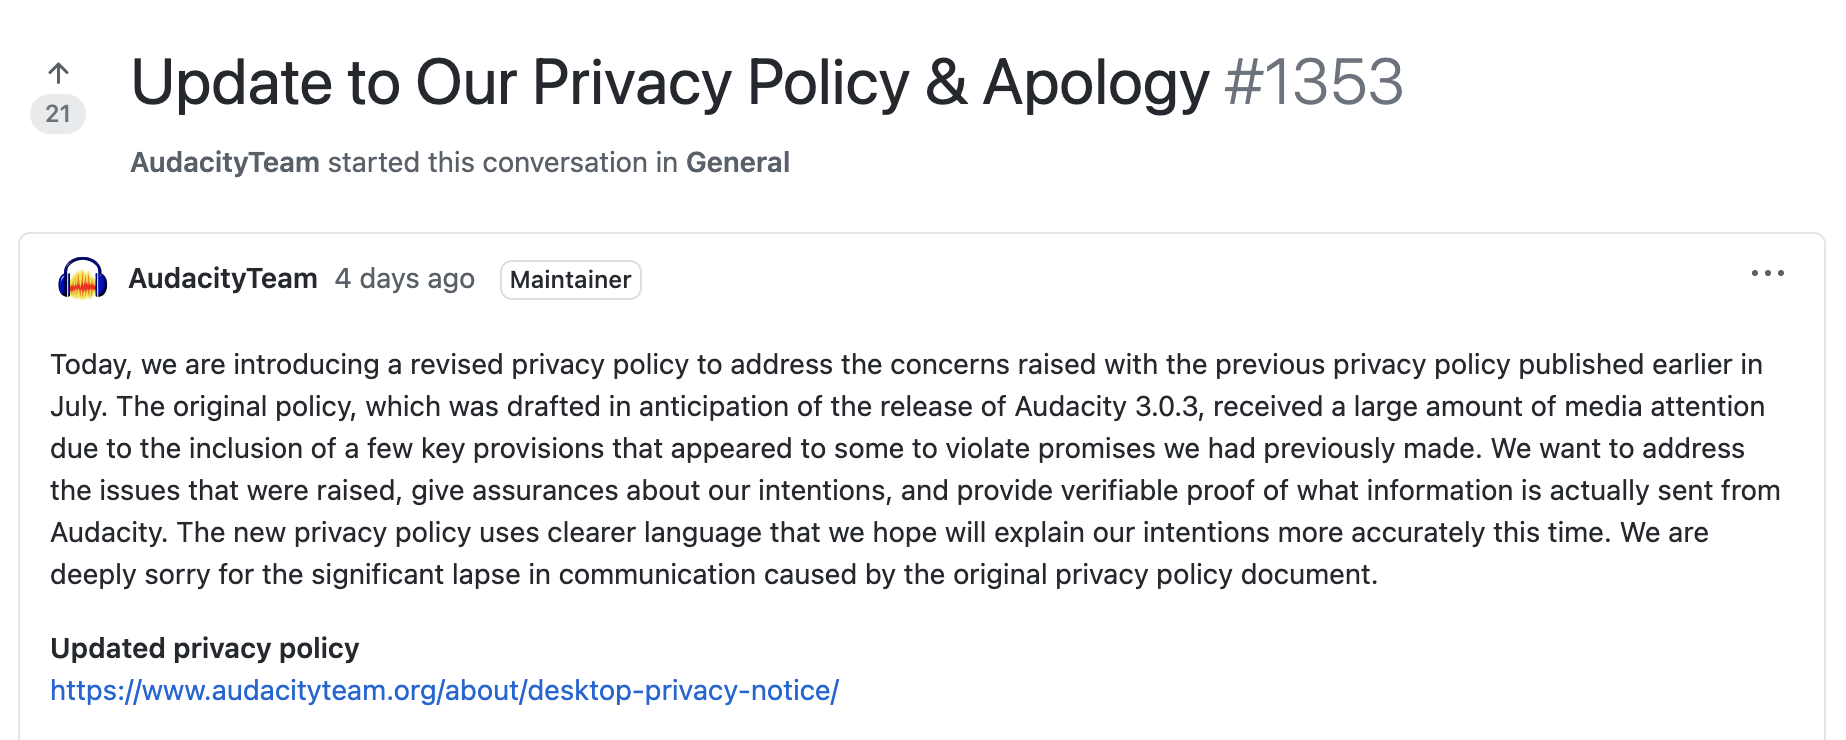 Audacity 为隐私政策引起的误解发布道歉声明，并重新修订政策